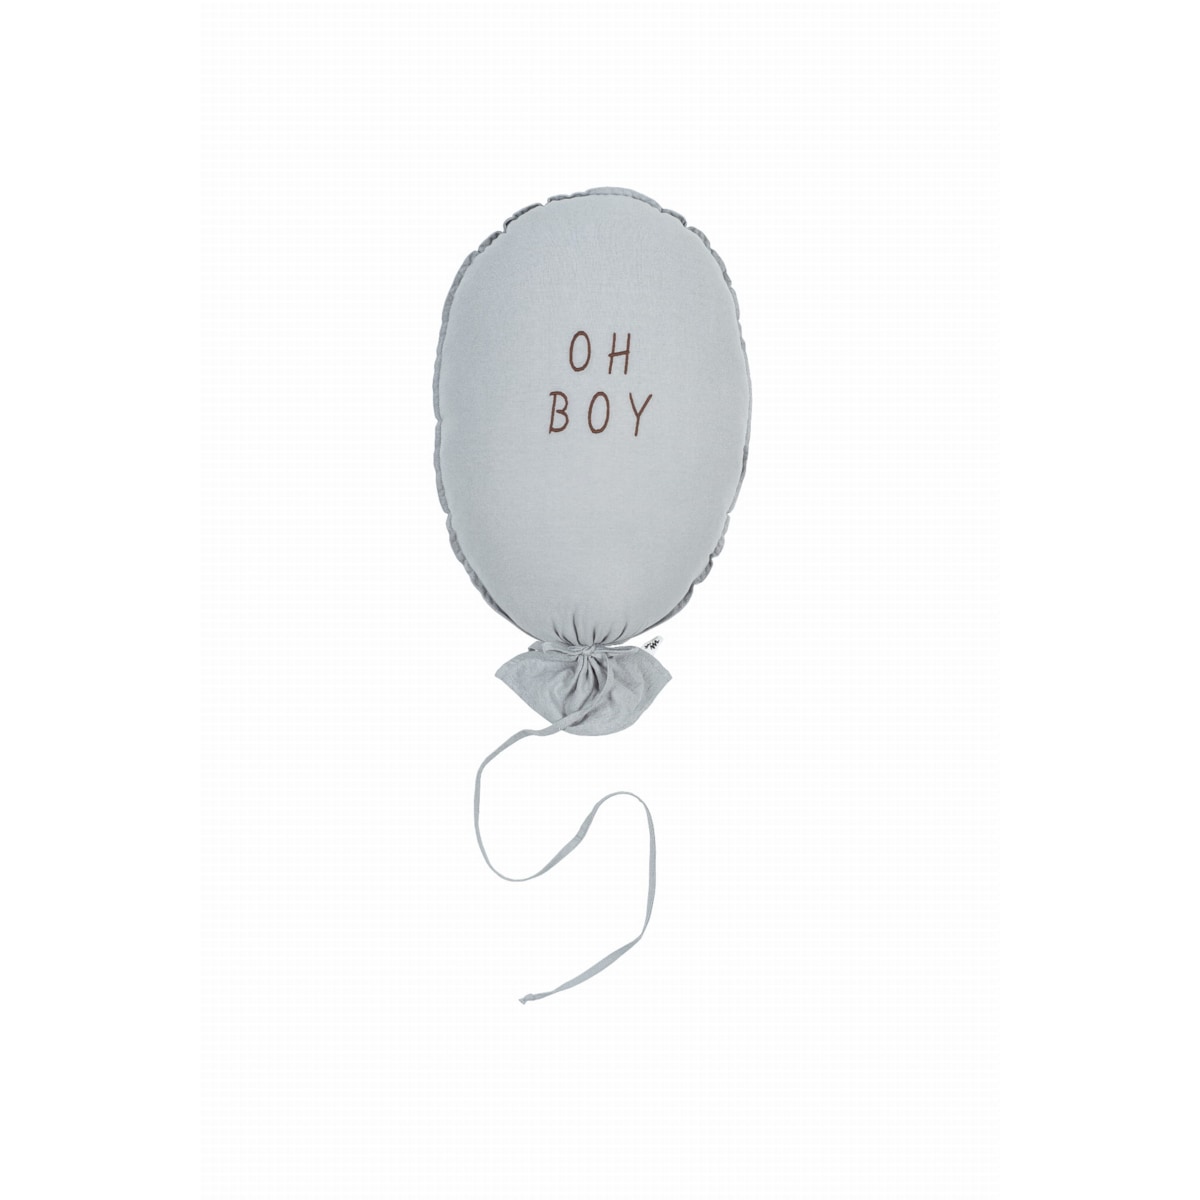 Balon dekoracyjny light grey - OH BOY, CARAMEL